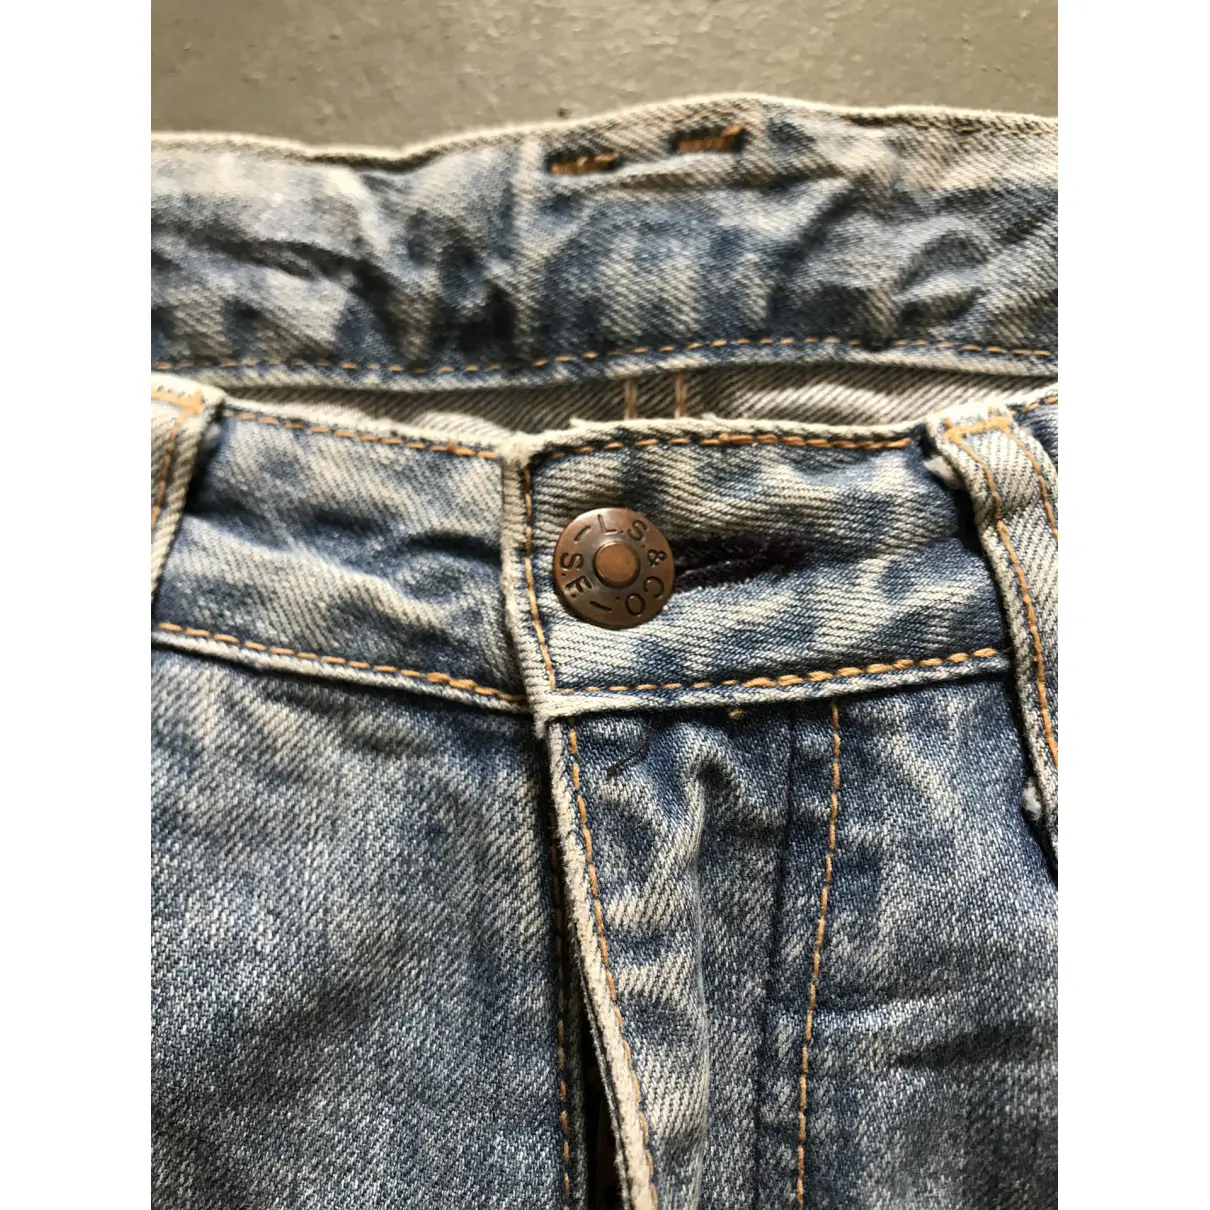 Bootcut jeans Levi's Vintage Clothing